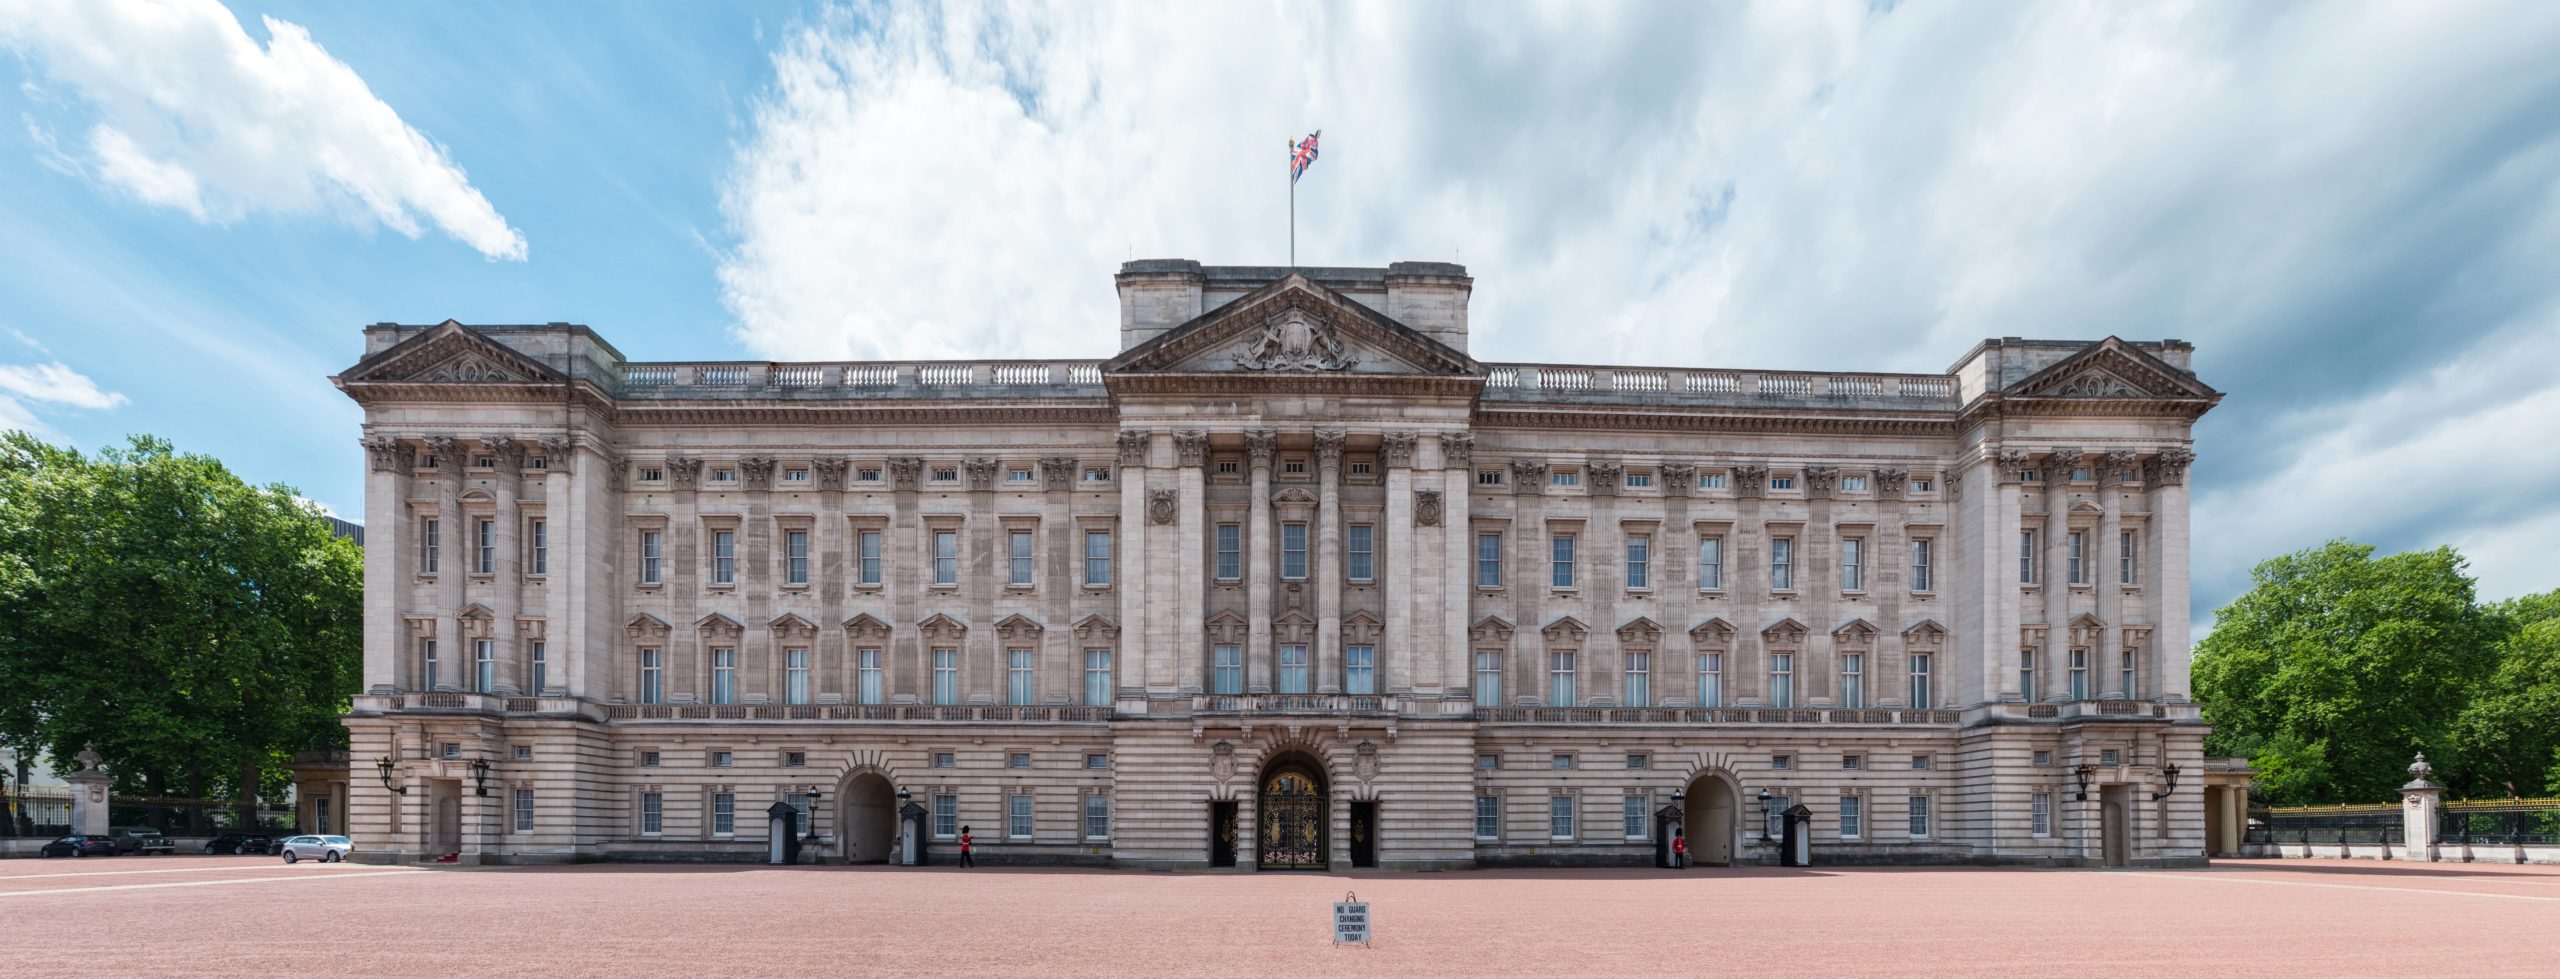 Buckingham Palace Panorama in London, United Kingdom